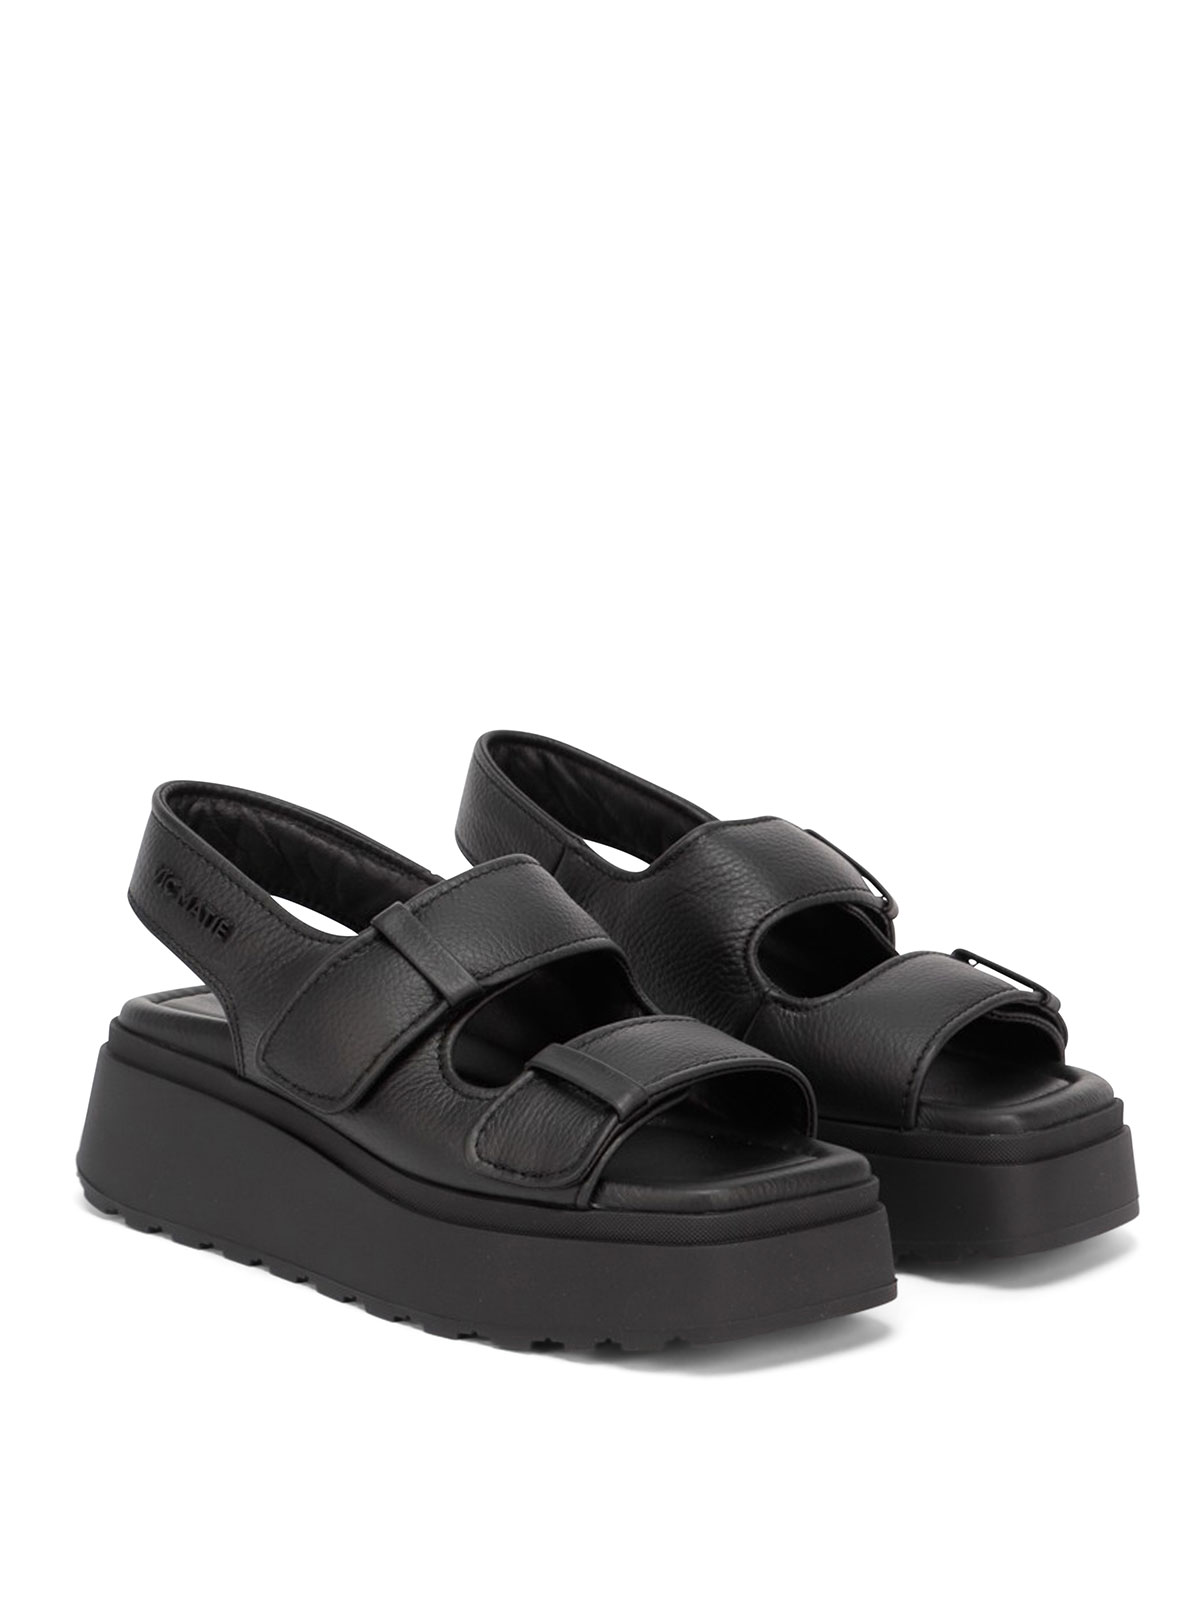 Sandals Vic Matiè - Chanel platform sandals - 1A4054DA04A010101